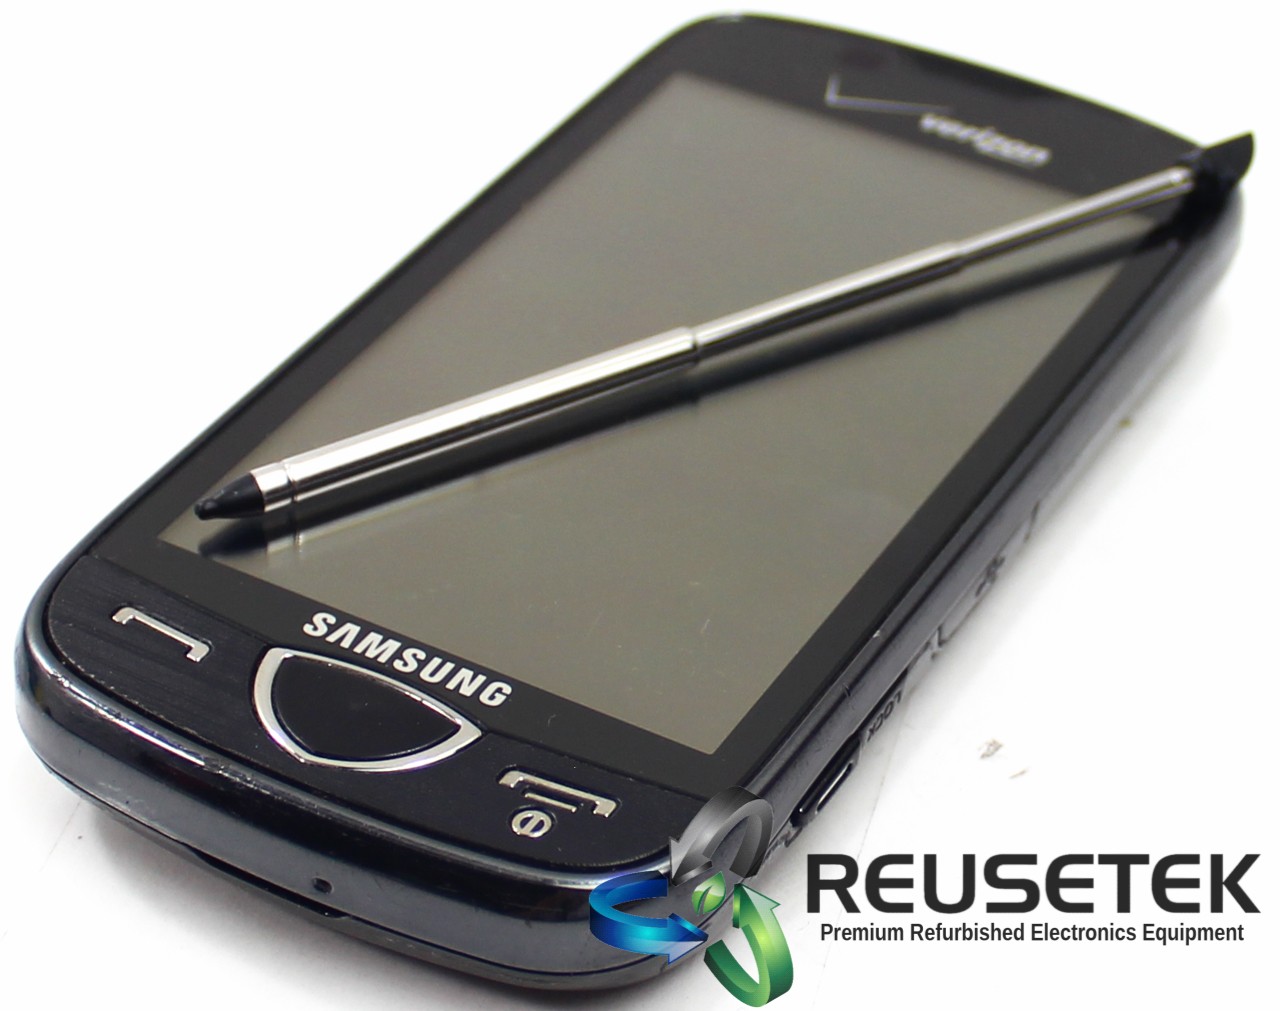 5000317351-Samsung Omnia II SCH-i920 Verizon Smartphone Cell Phone Black-image